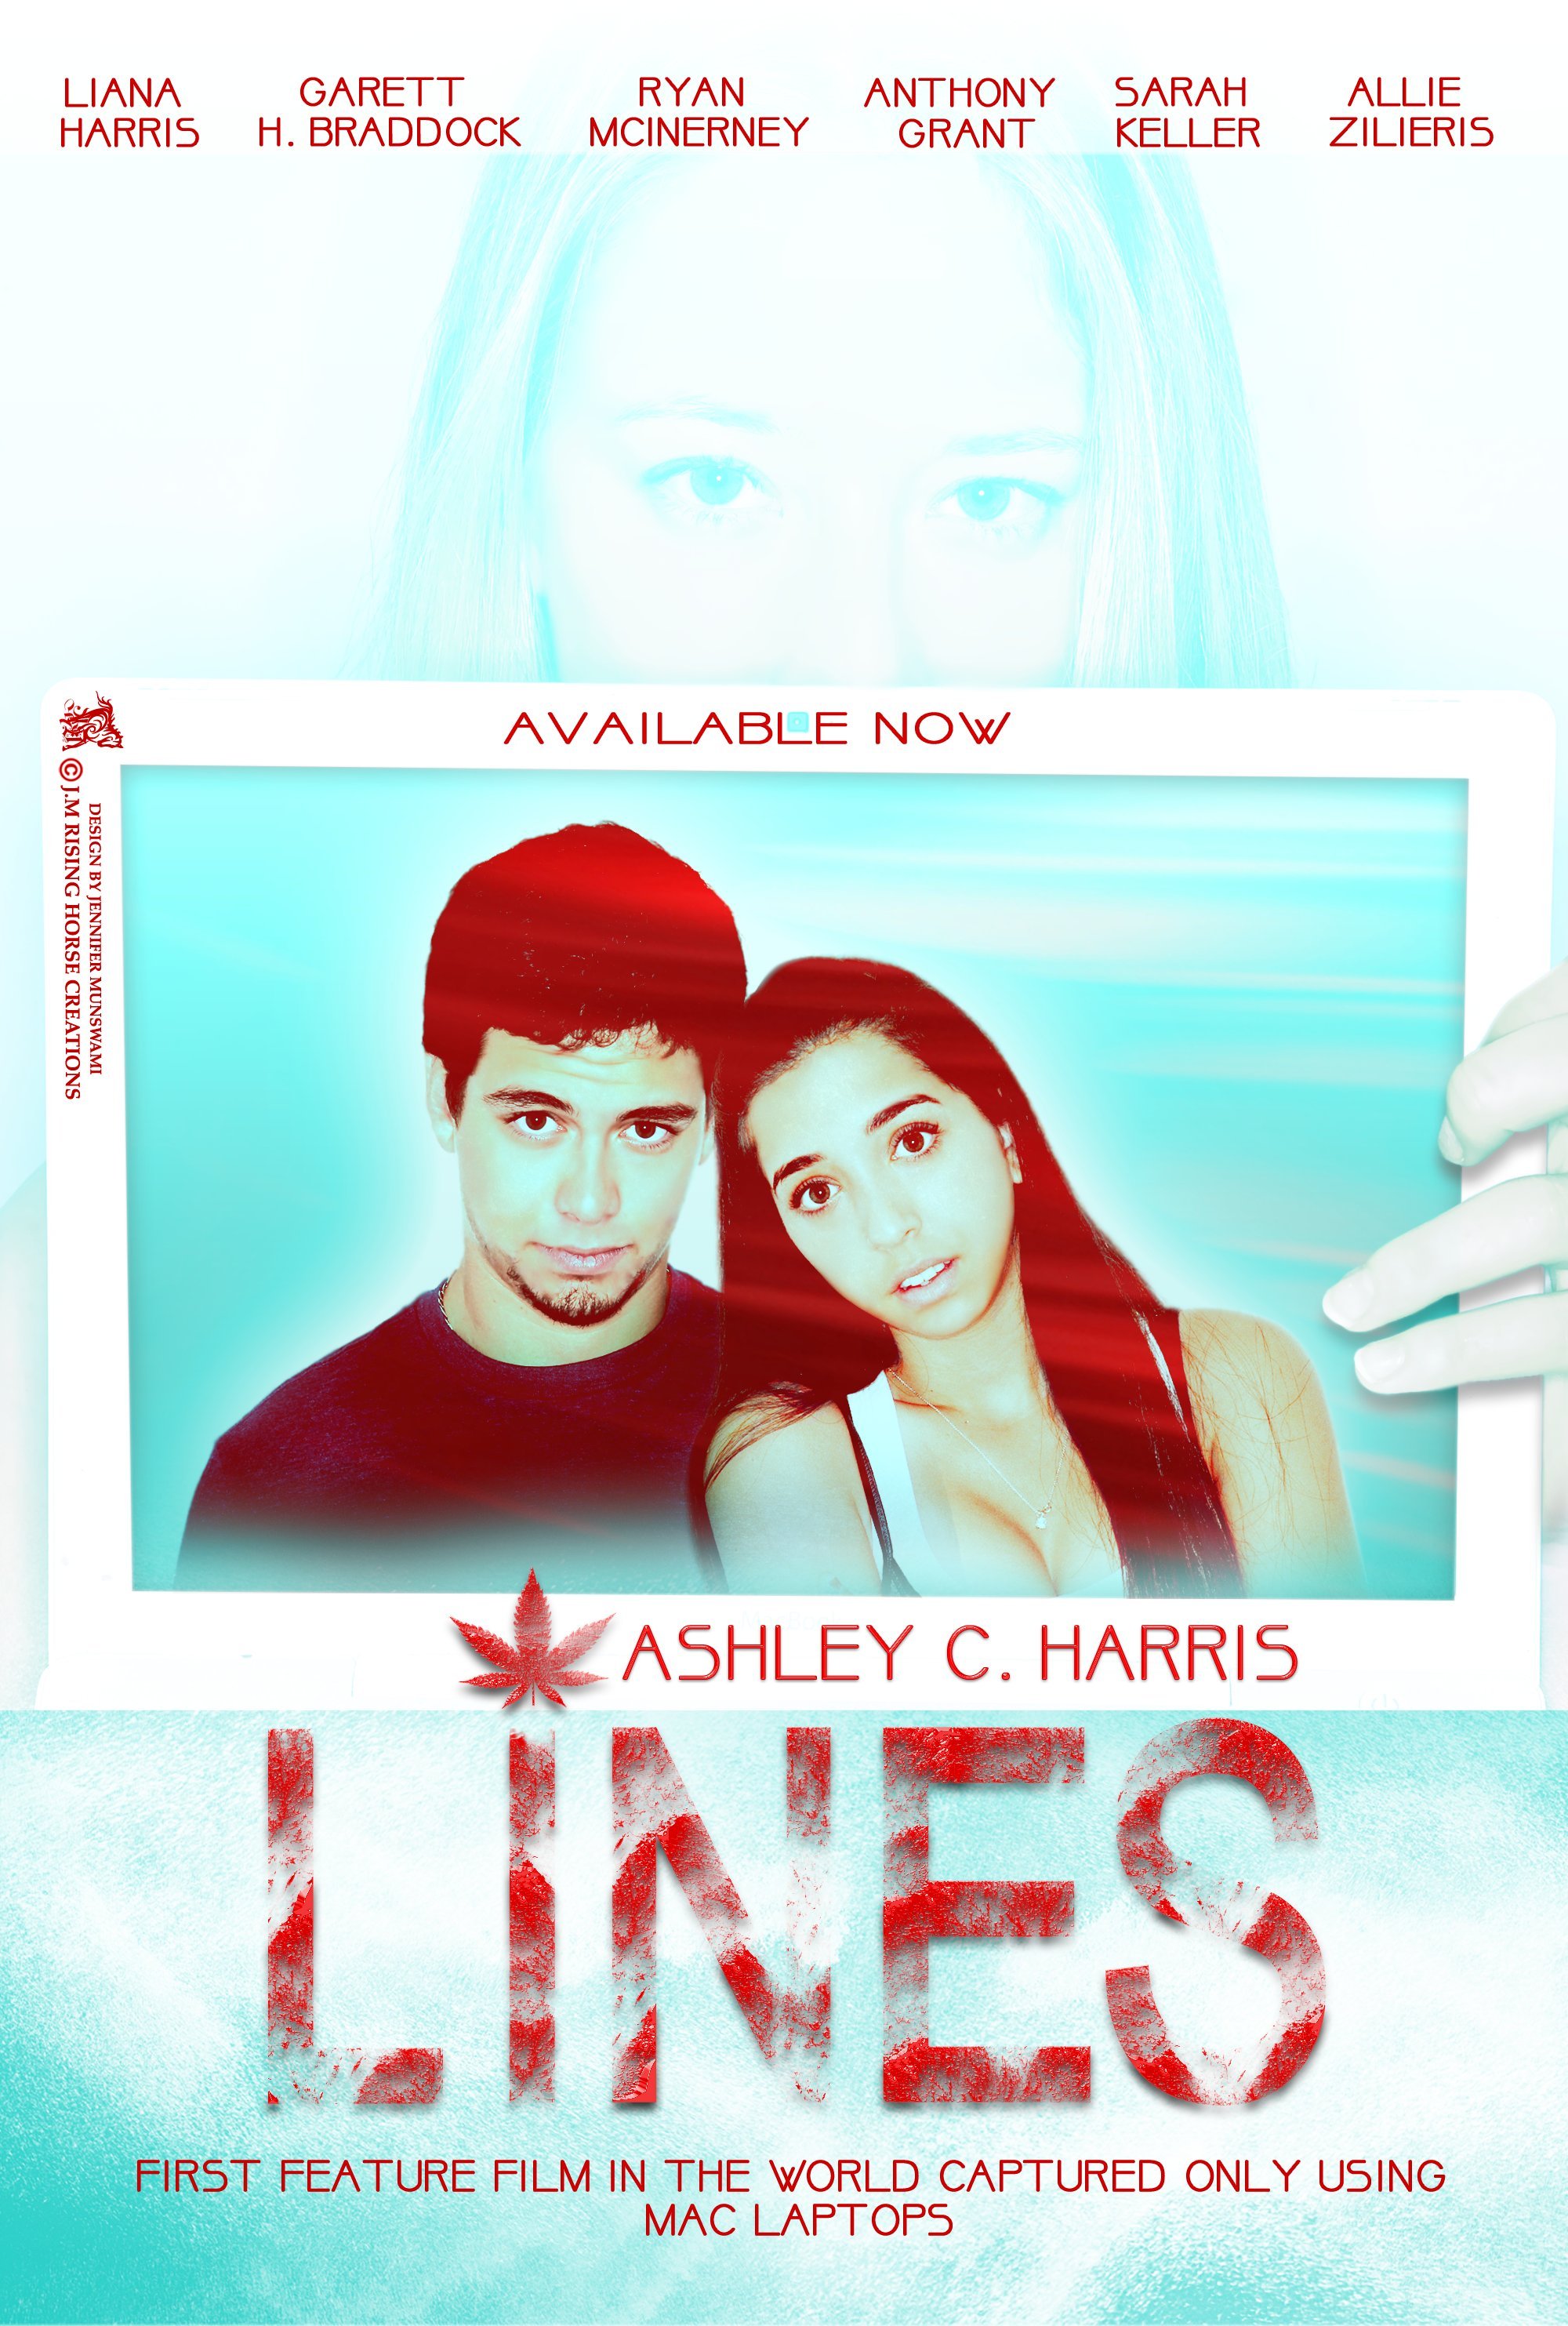 Garrett Holmes Braddock, Ashley C. Harris and Liana Harris in Lines (2014)